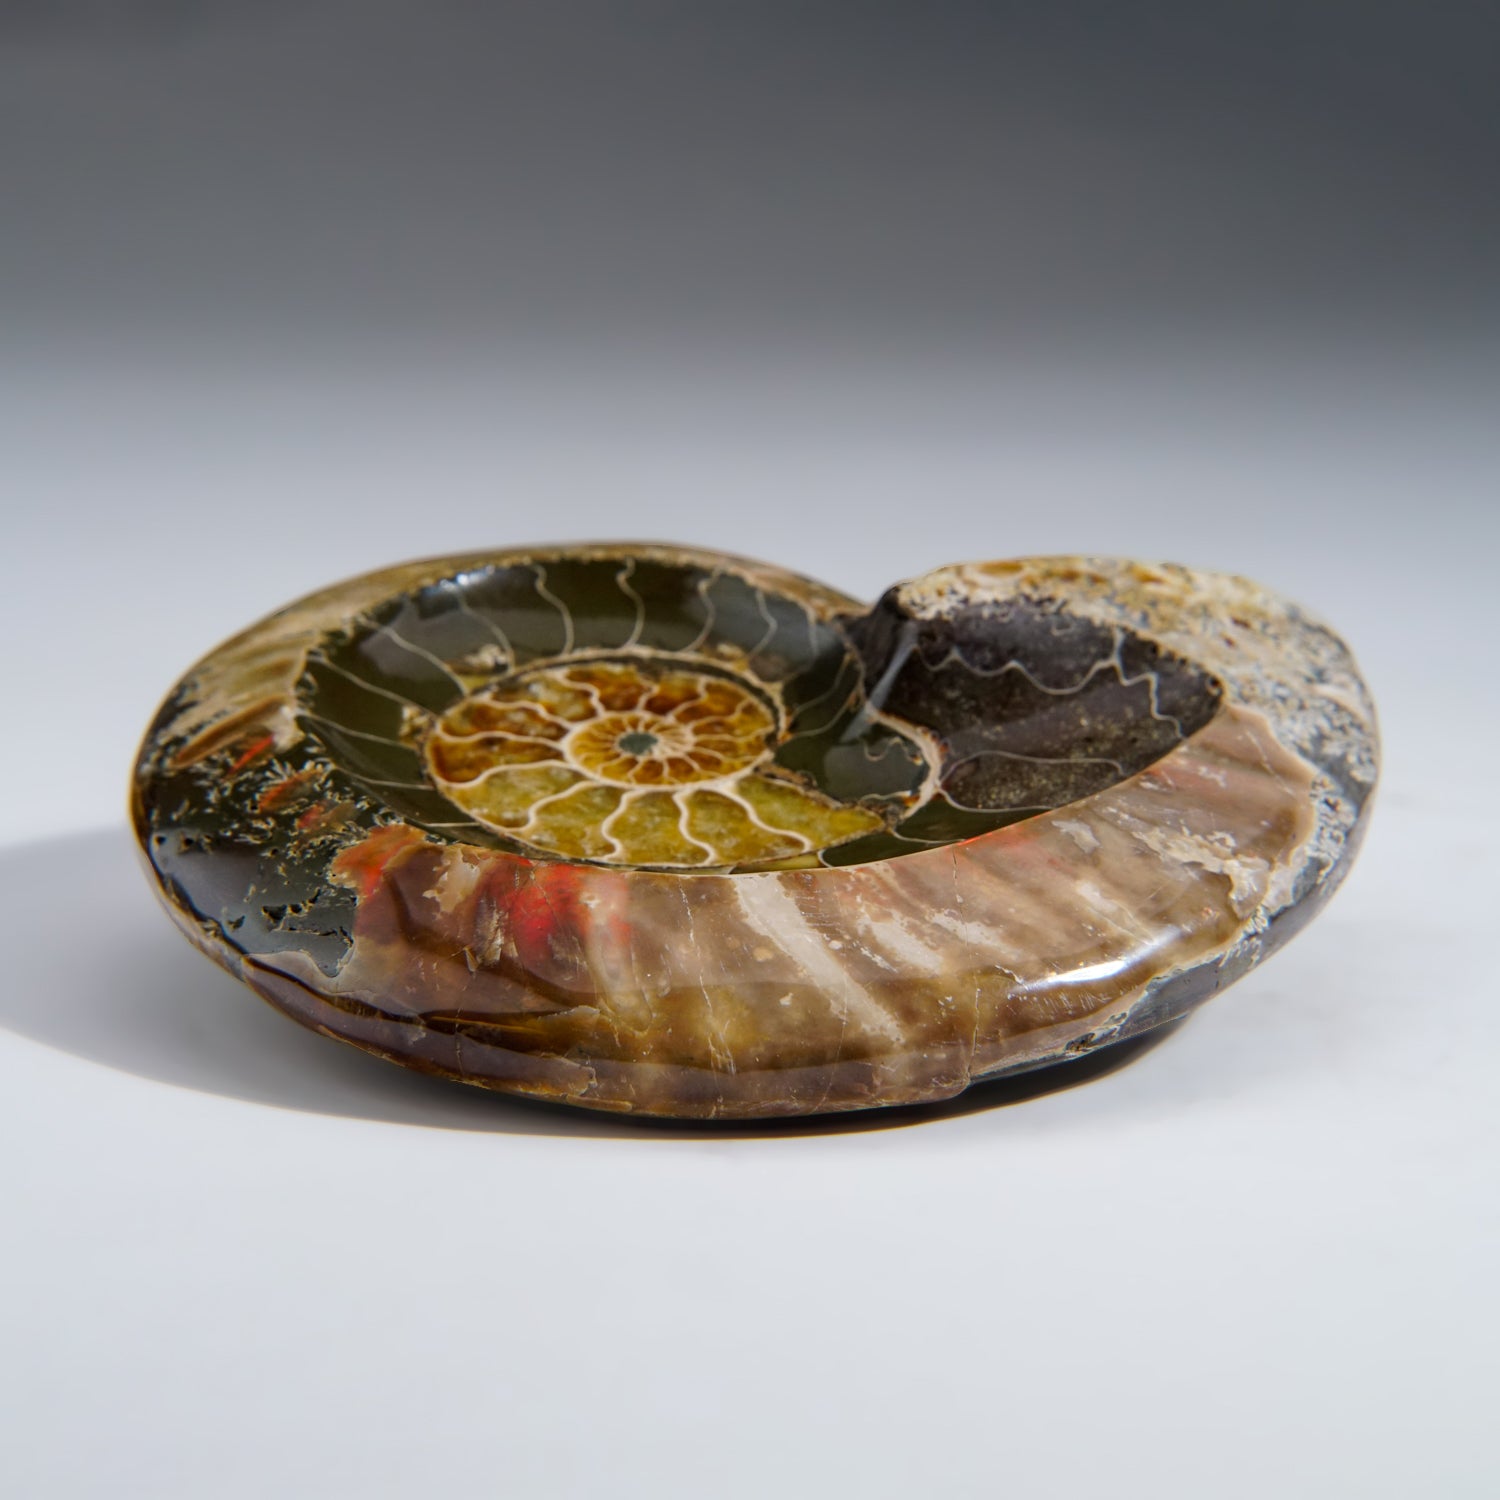 Genuine Polished Ammonite Fossil Dish (1 lb)